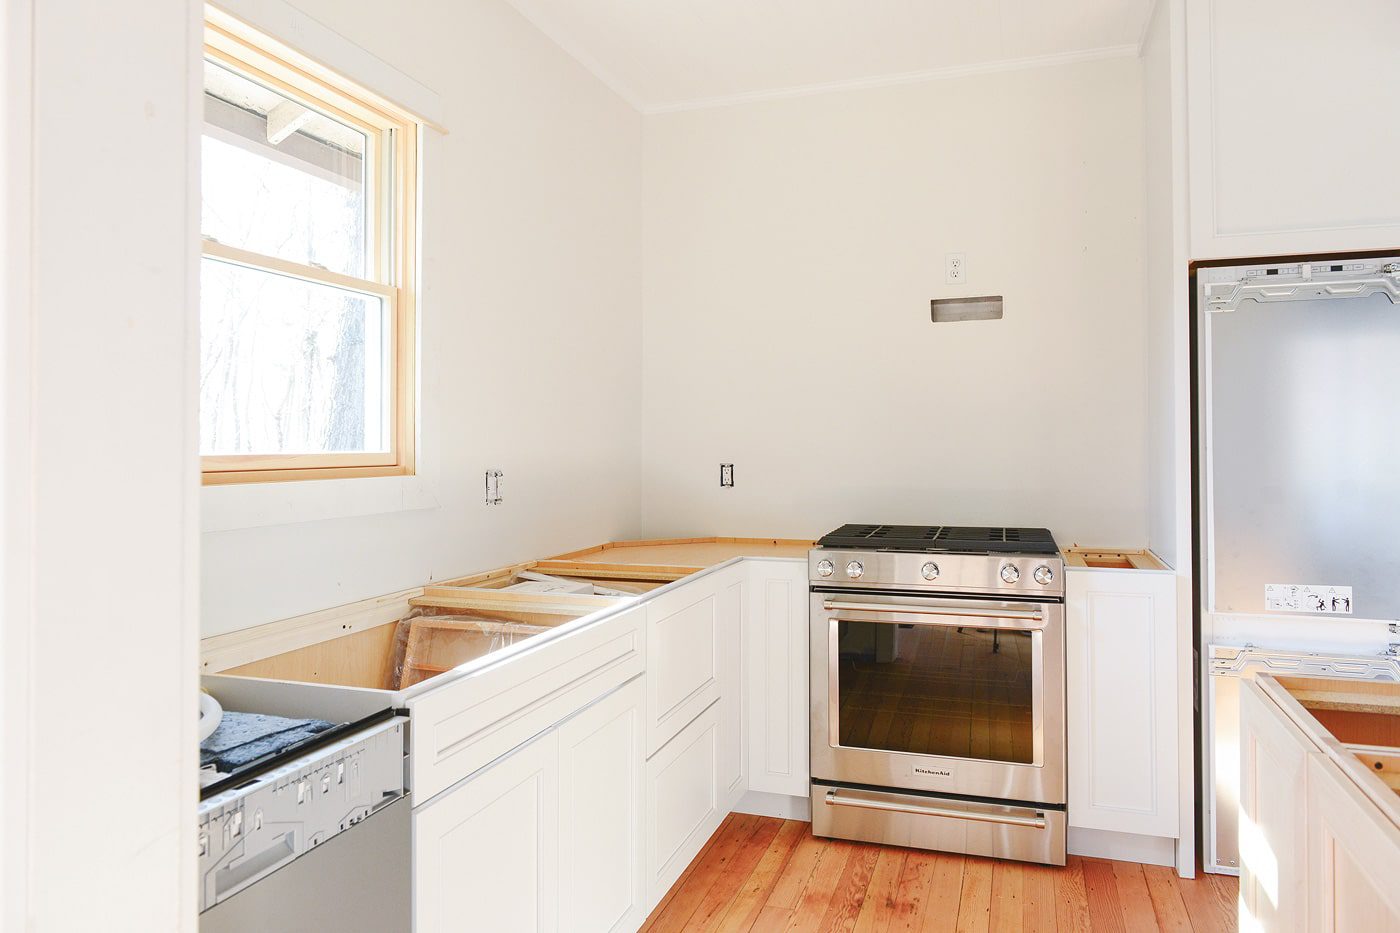 Kitchen + Mudroom Progress: The Cabinets Are In! - Yellow Brick Home